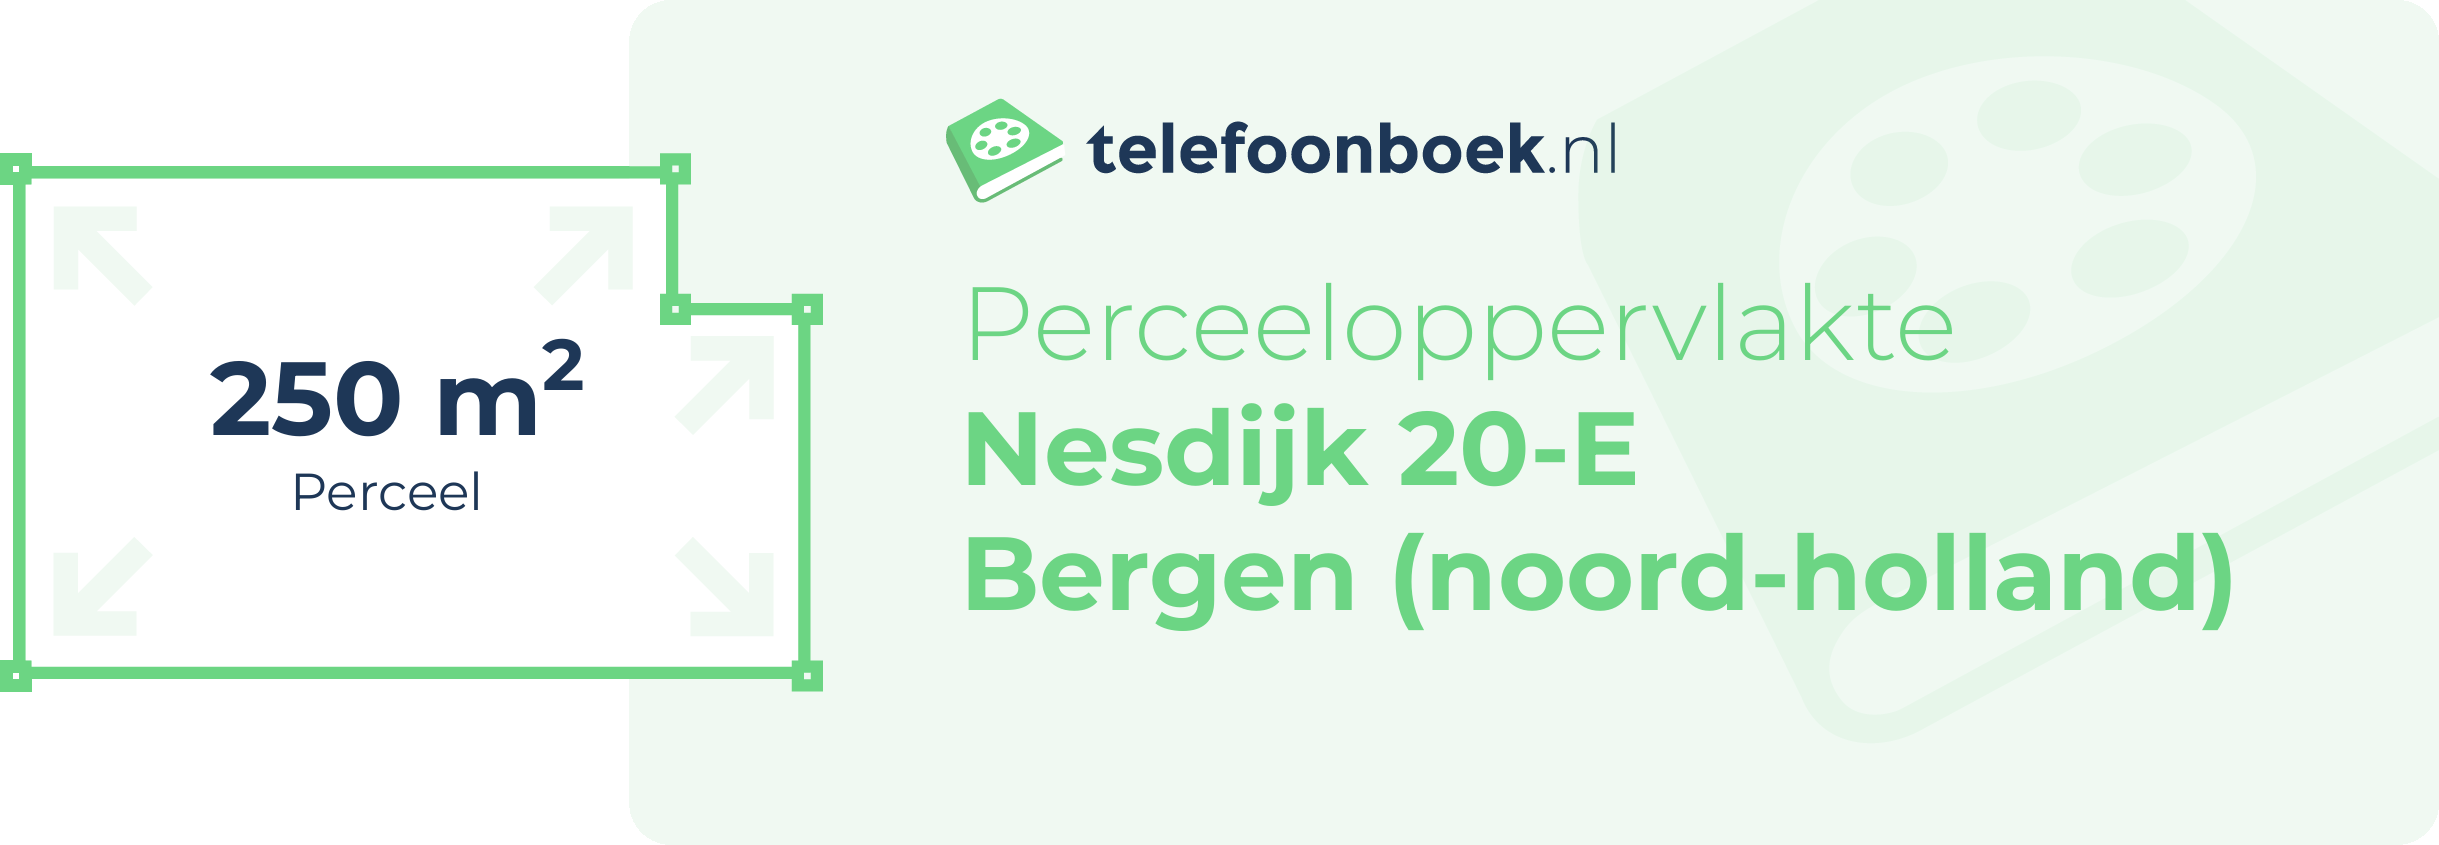 Perceeloppervlakte Nesdijk 20-E Bergen (Noord-Holland)